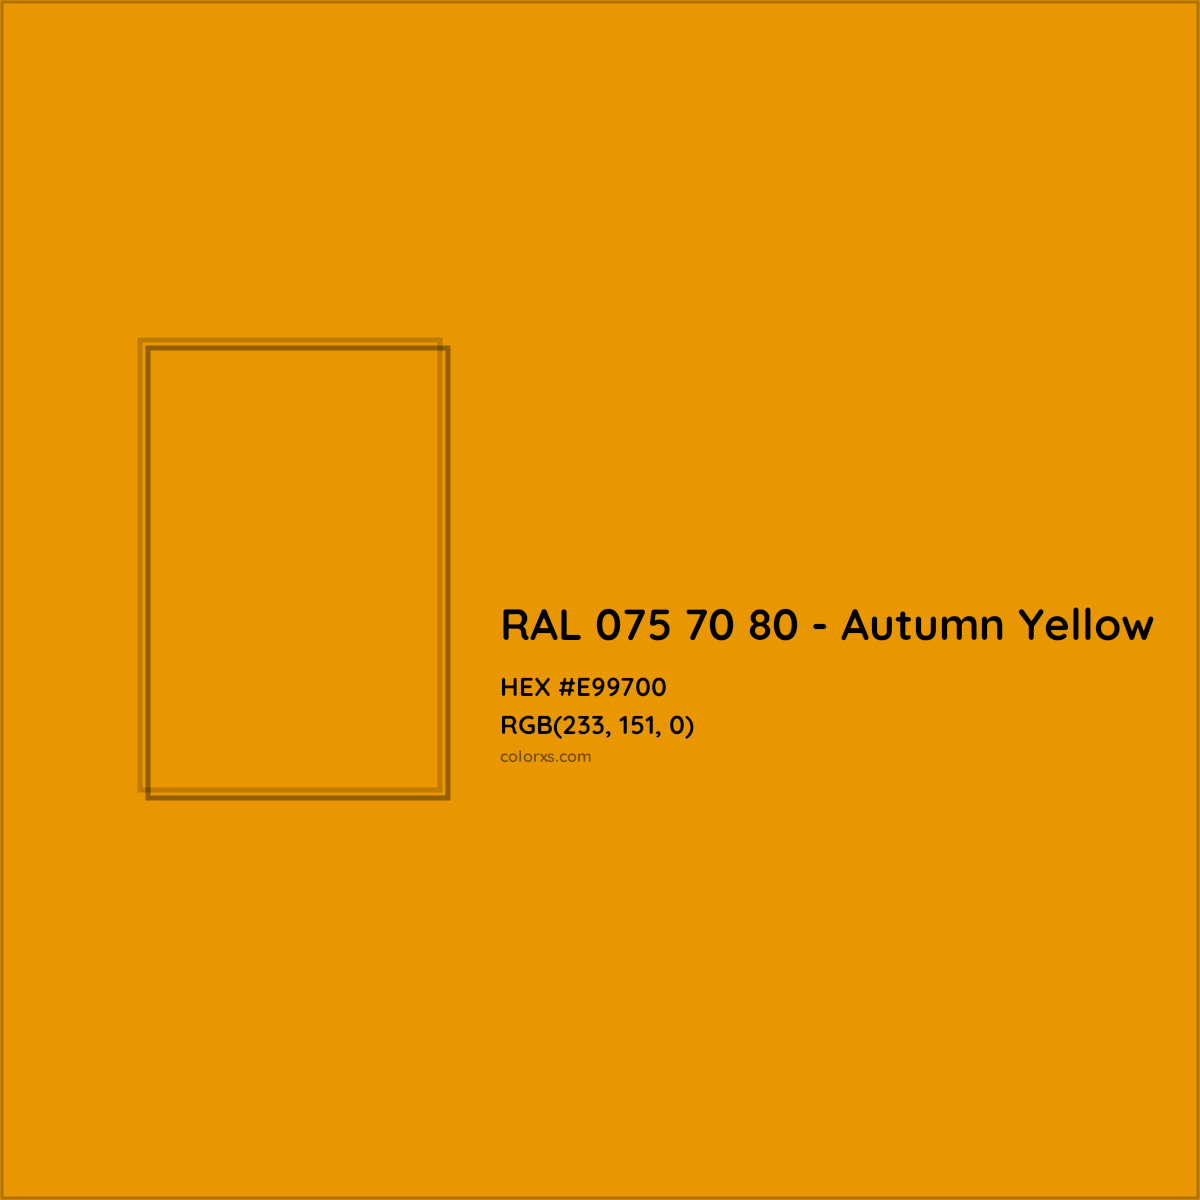 HEX #E99700 RAL 075 70 80 - Autumn Yellow CMS RAL Design - Color Code